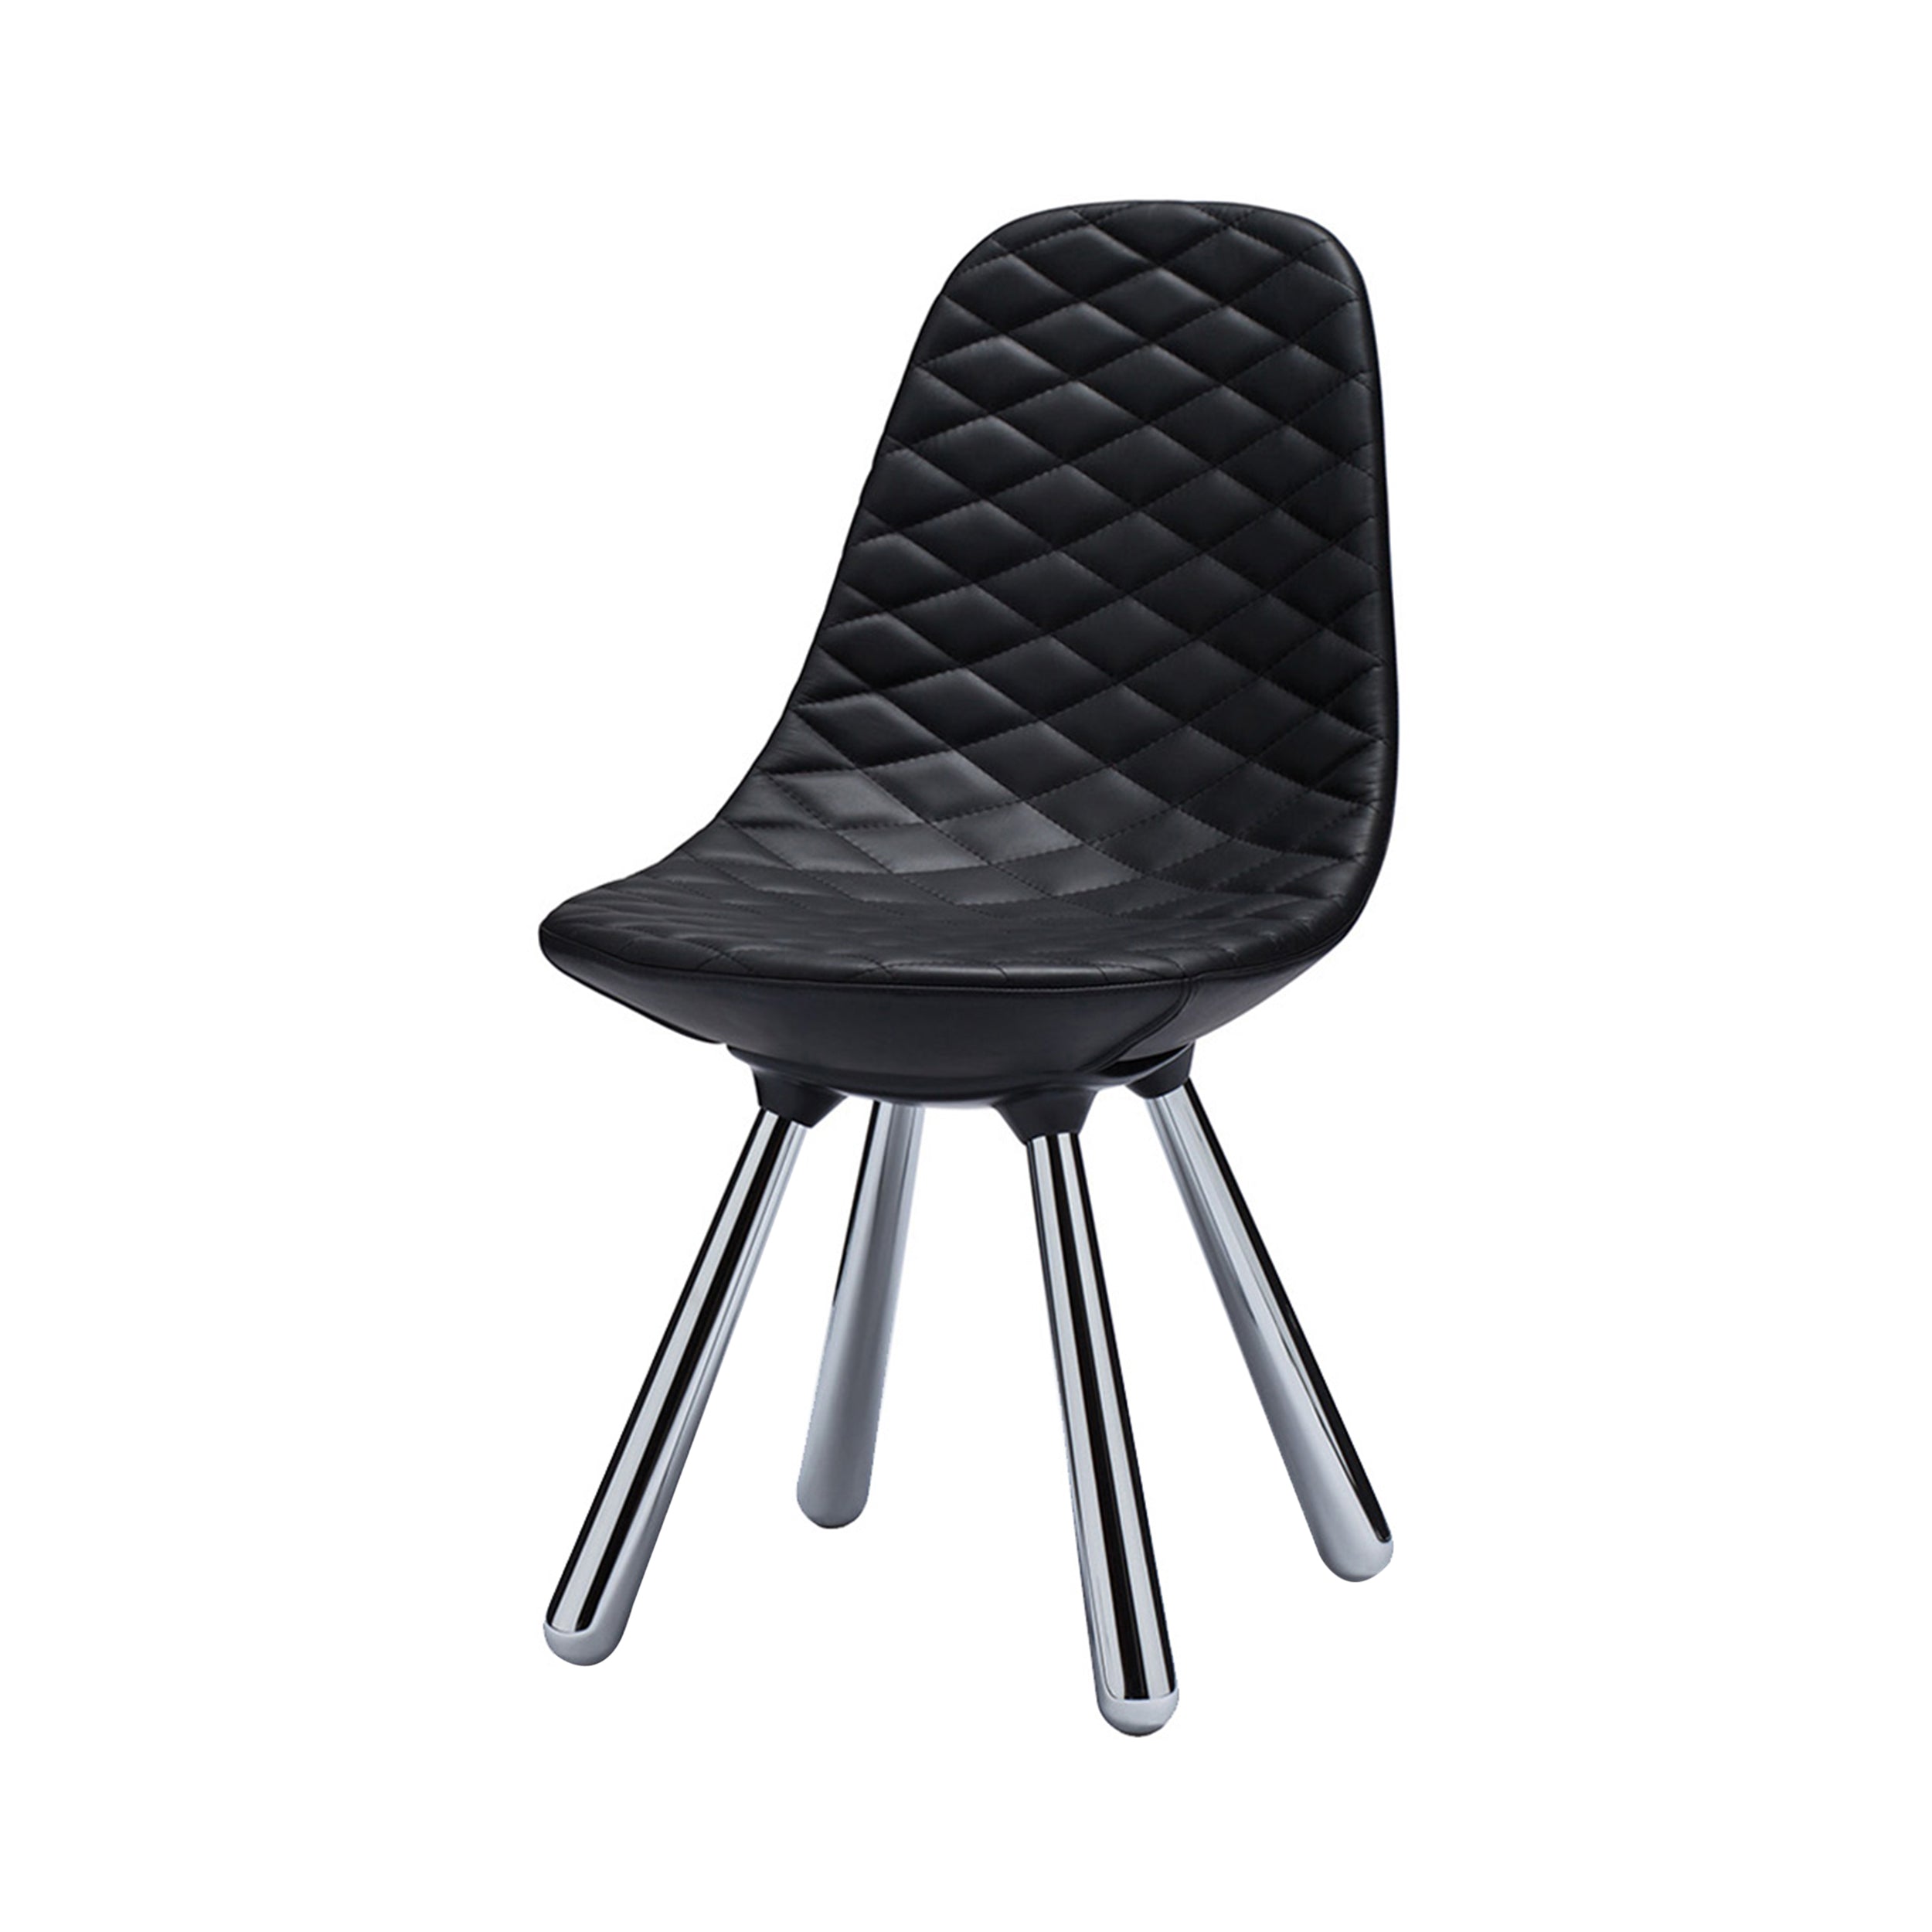 Tudor Chair: Chrome + Black Leather + Diamond + Without Arms